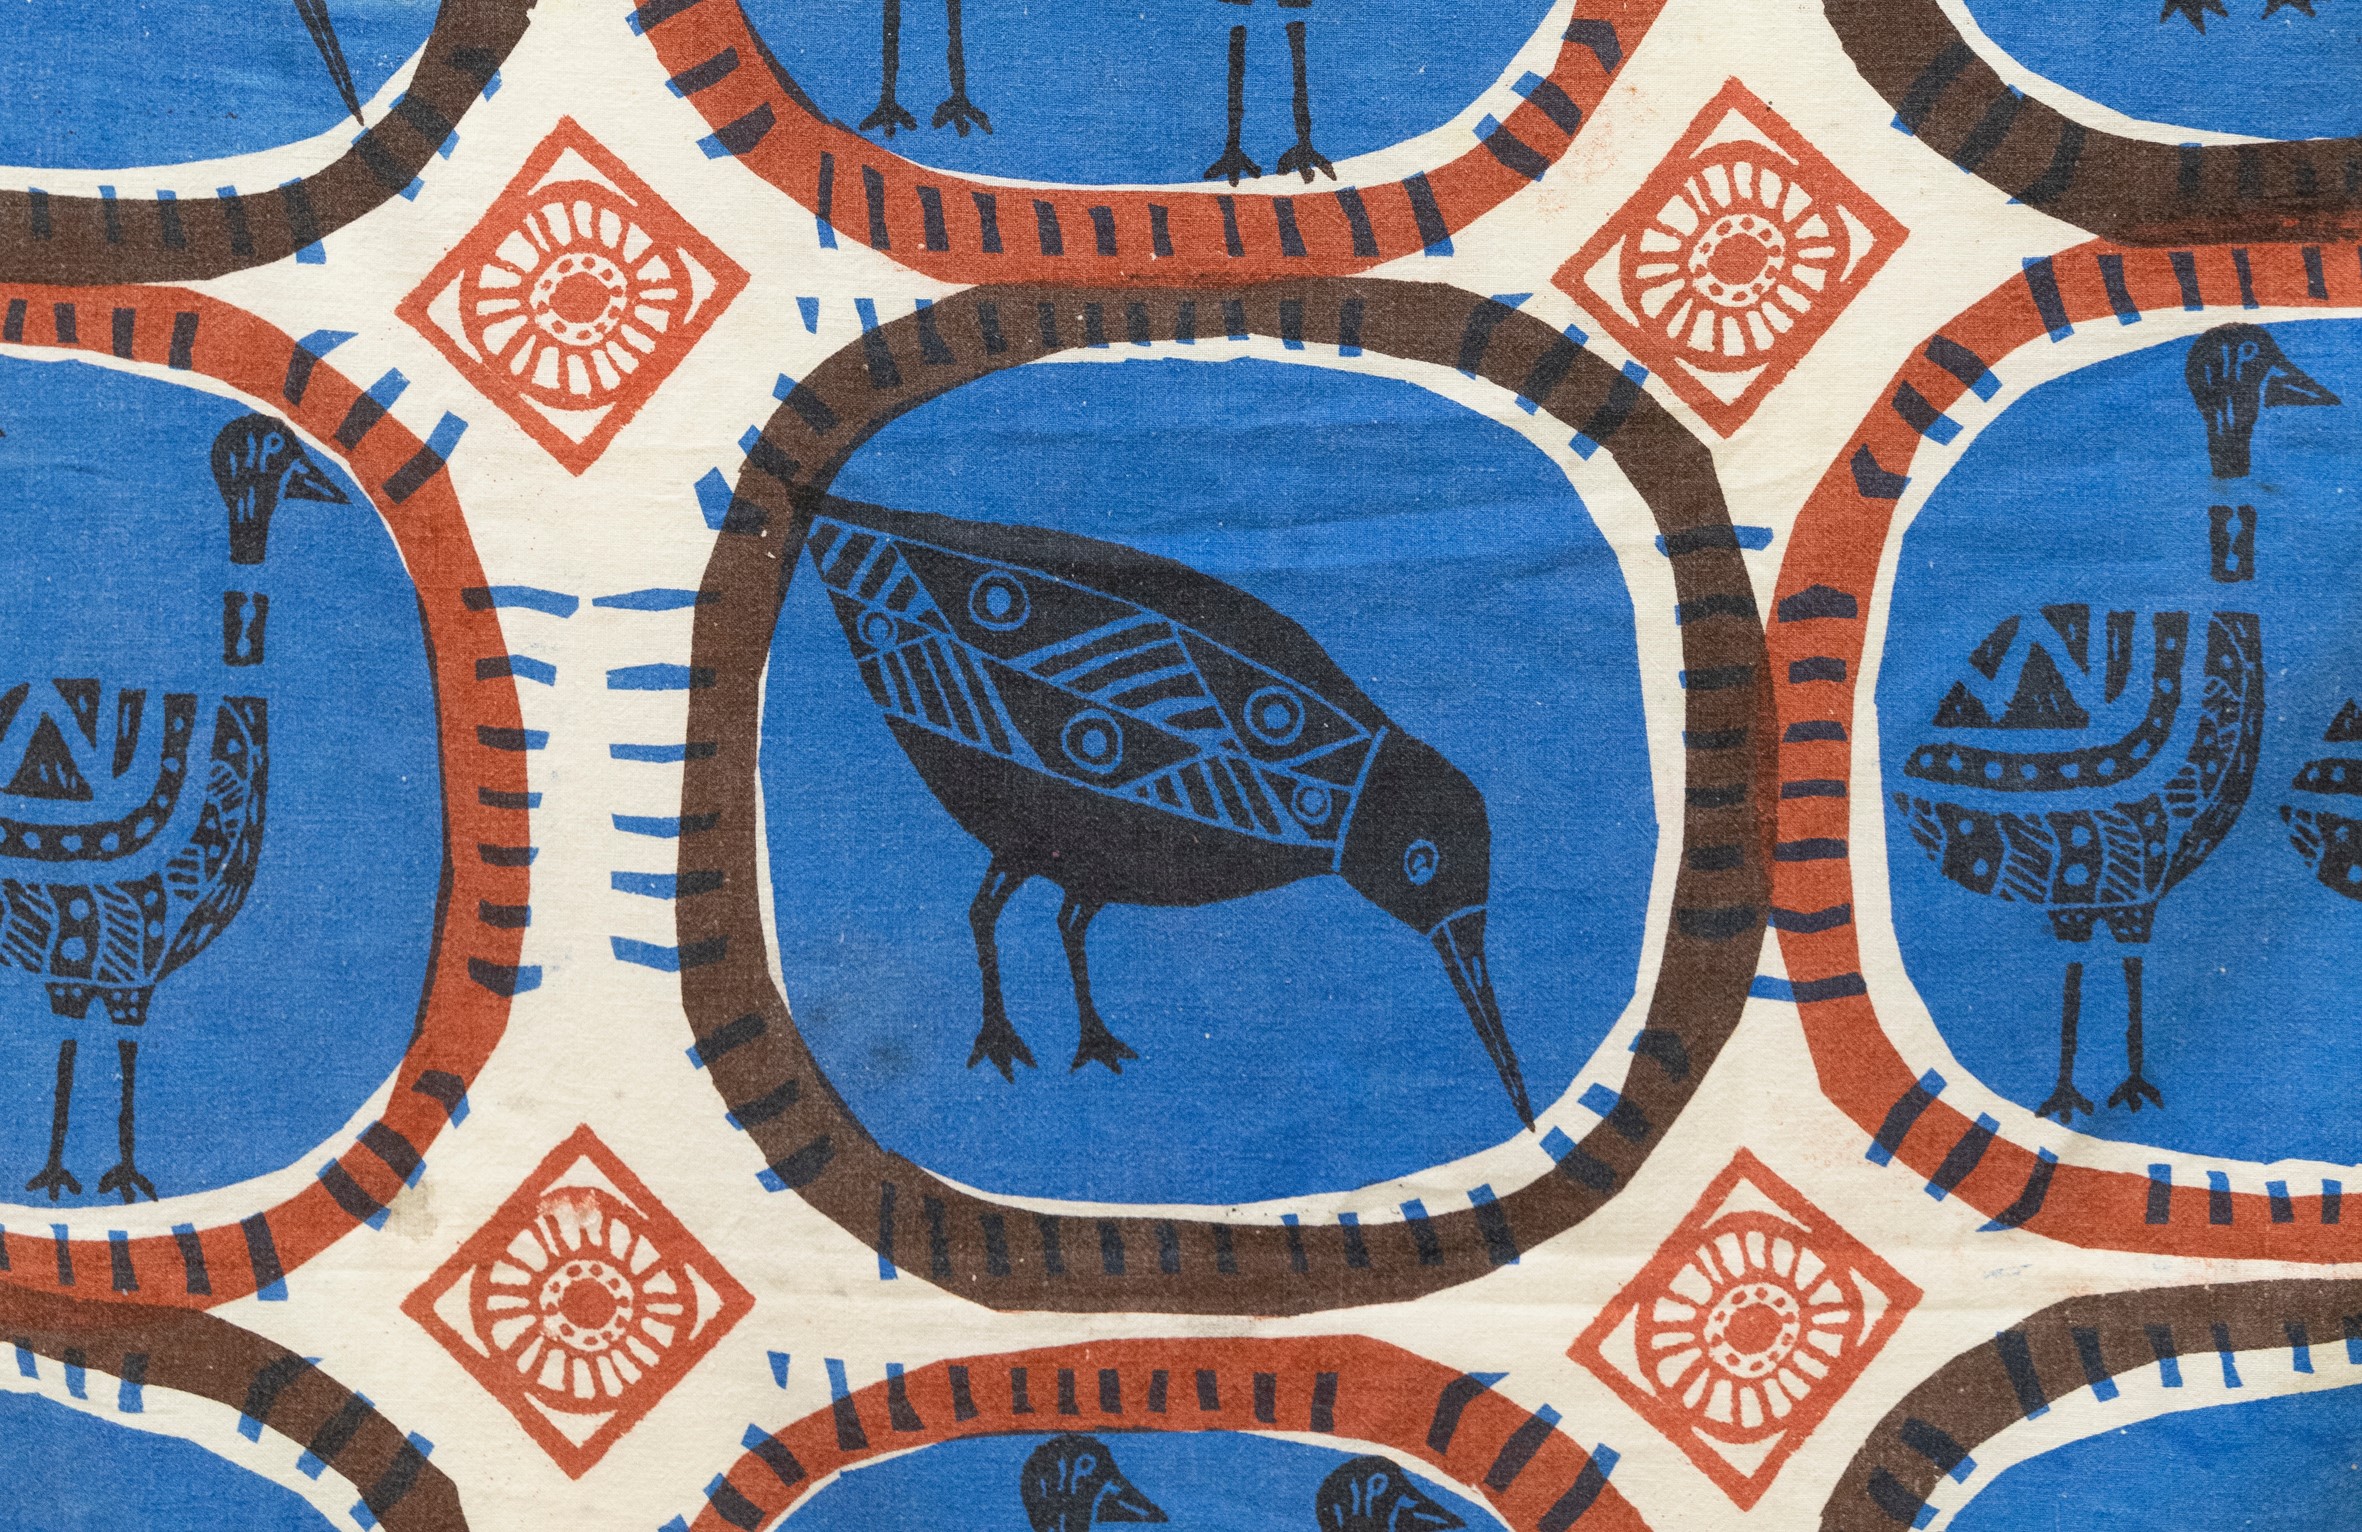 Blue and orange screen printed fabric featuring bird motifs.